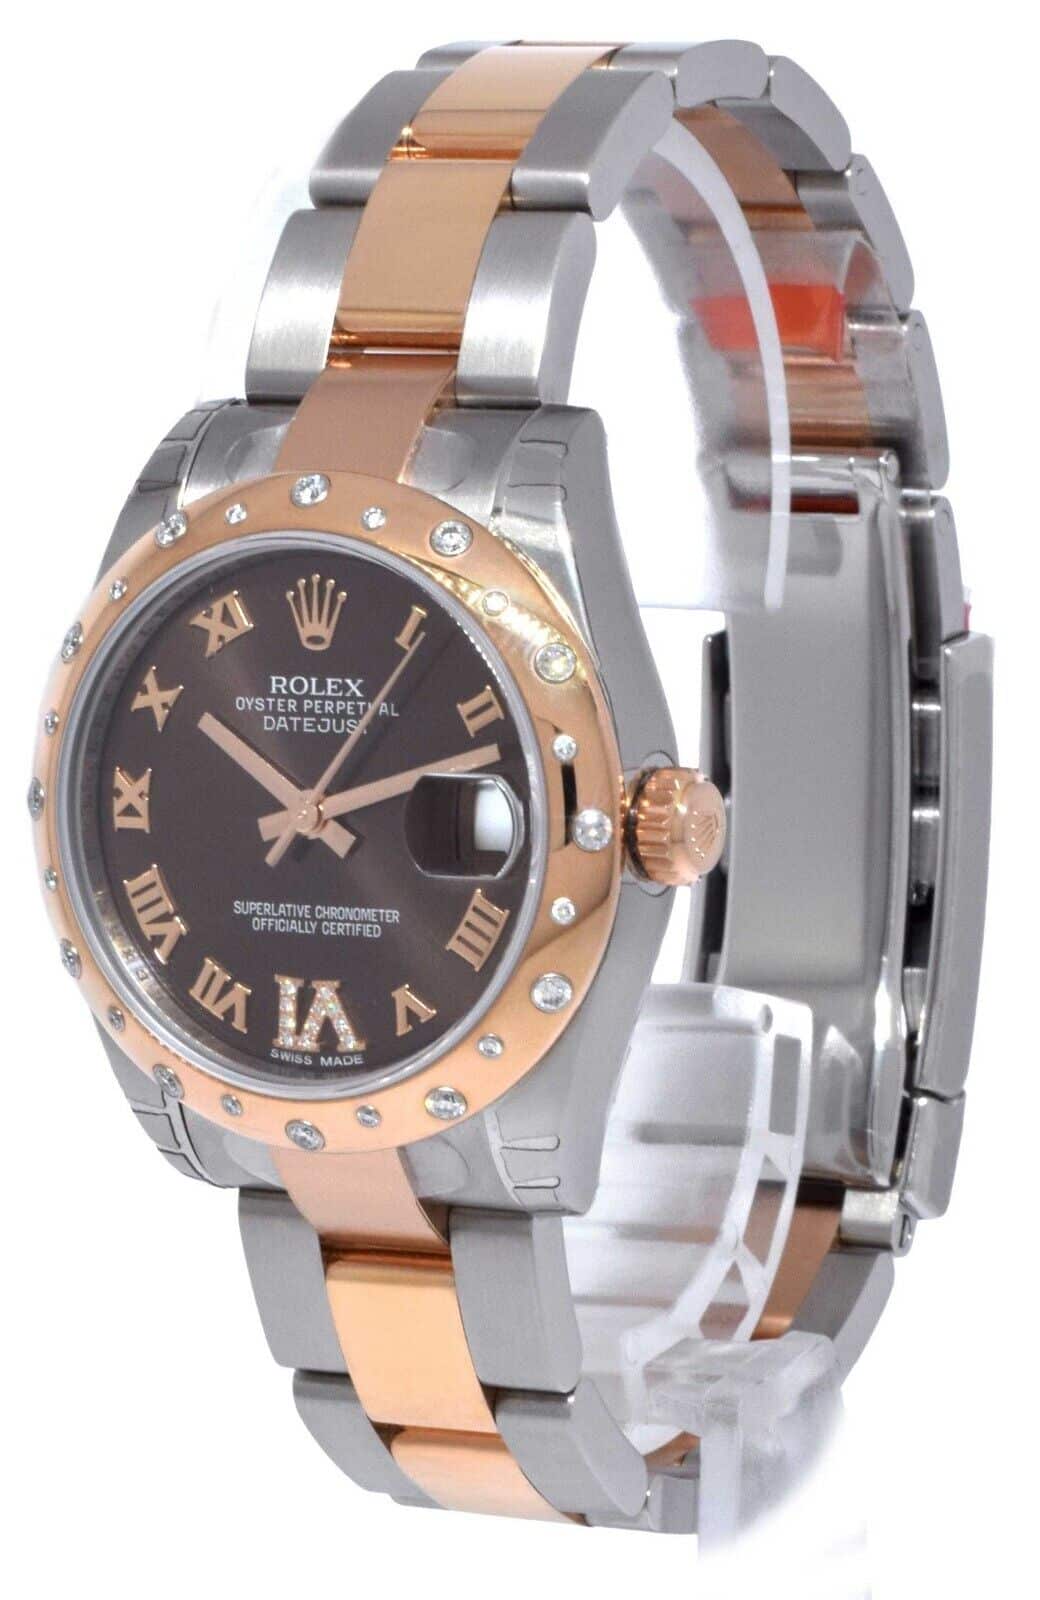 NOS Rolex Datejust 31 SS/18k RG Diamond Bezel Chocolate Dial Watch + '21 178341